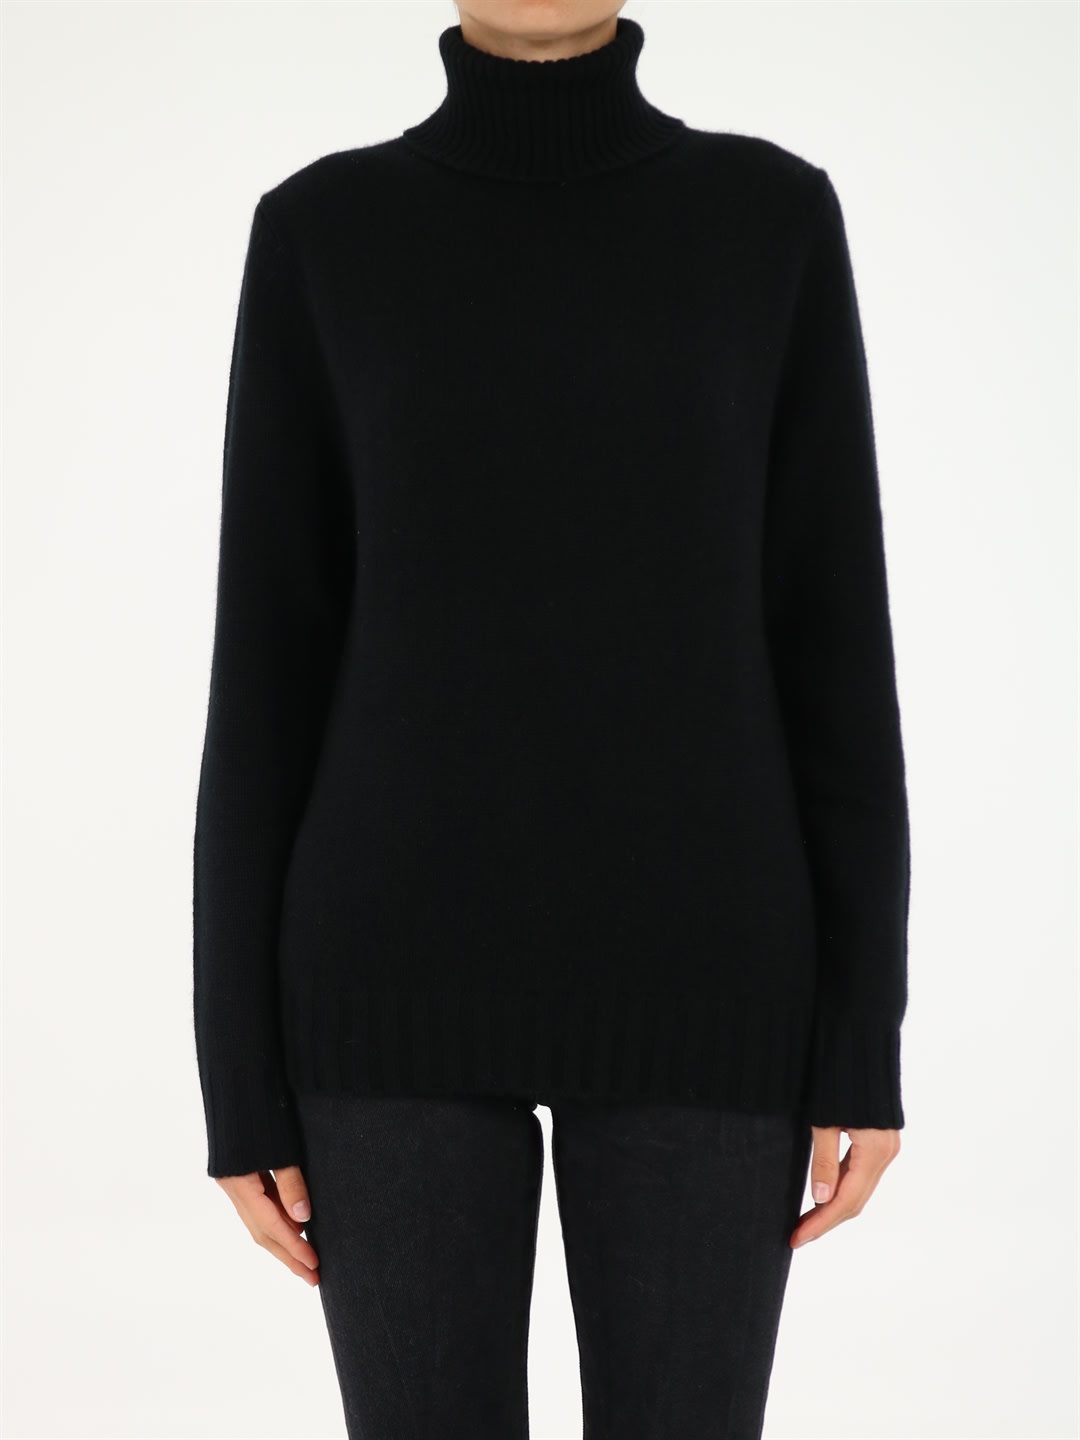 Allude Black Turtleneck Sweater